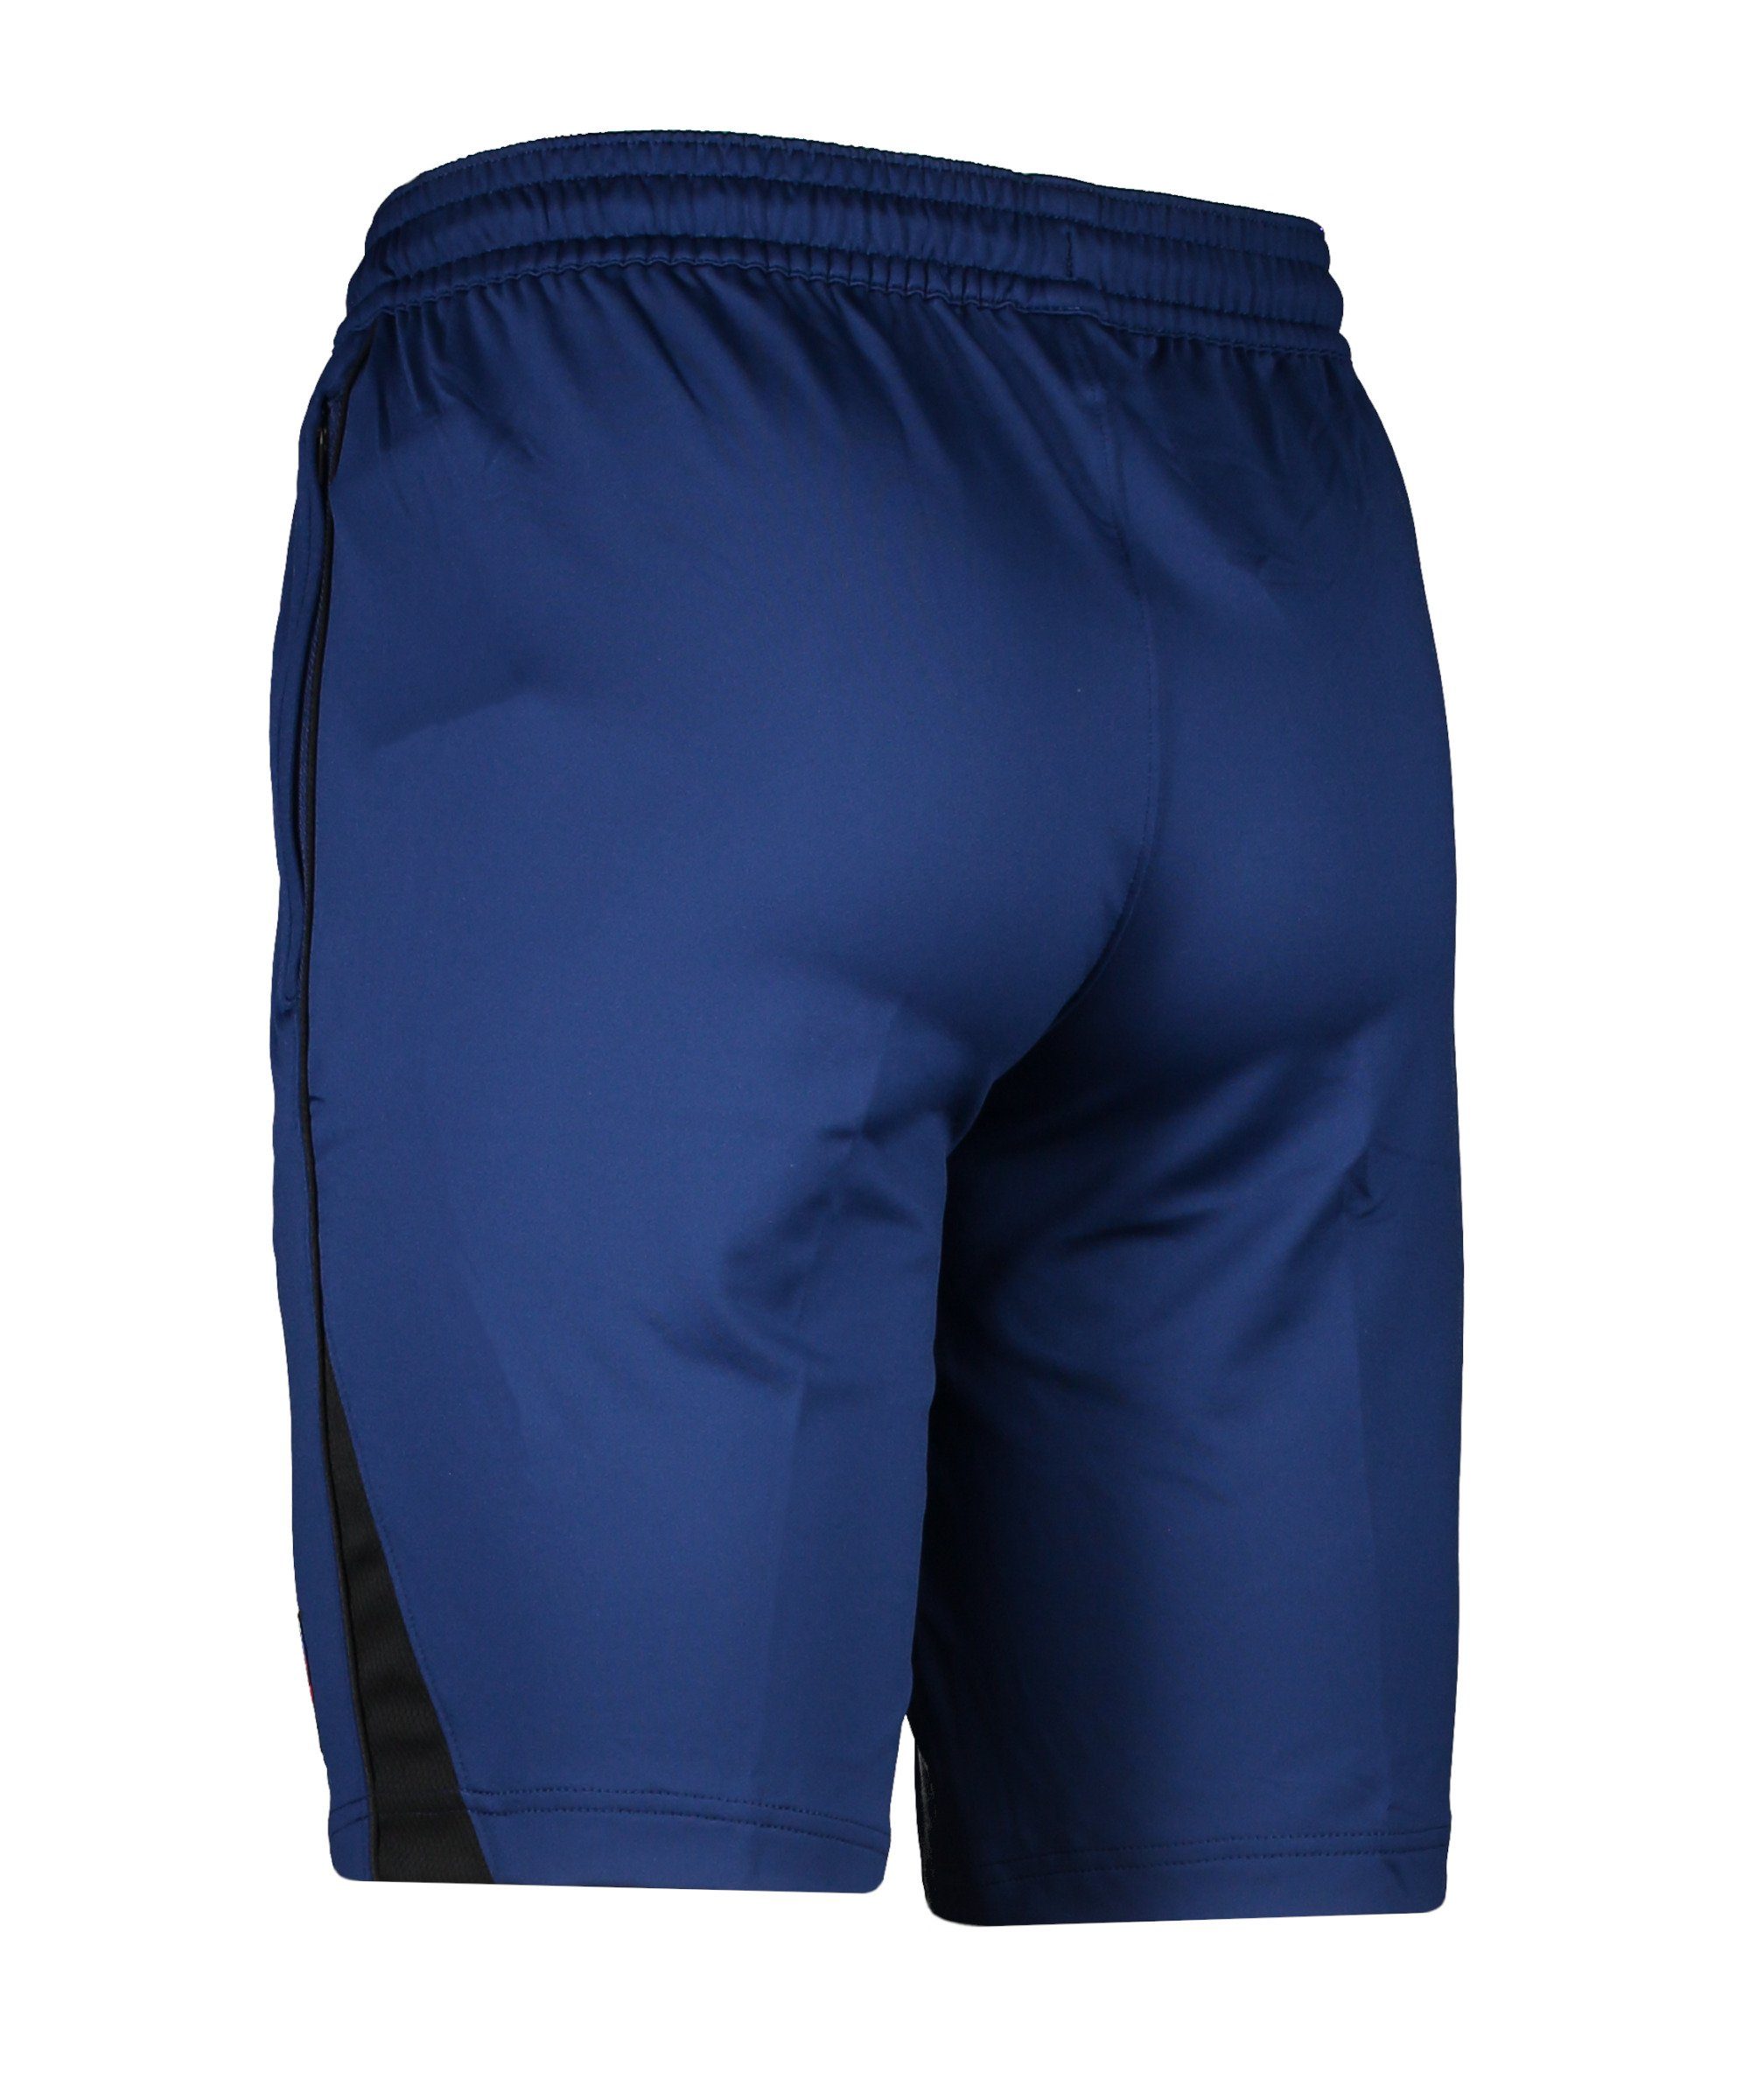 Jogginghose Bonito Short Nike Sportswear blauschwarzweiss F.C. Joga